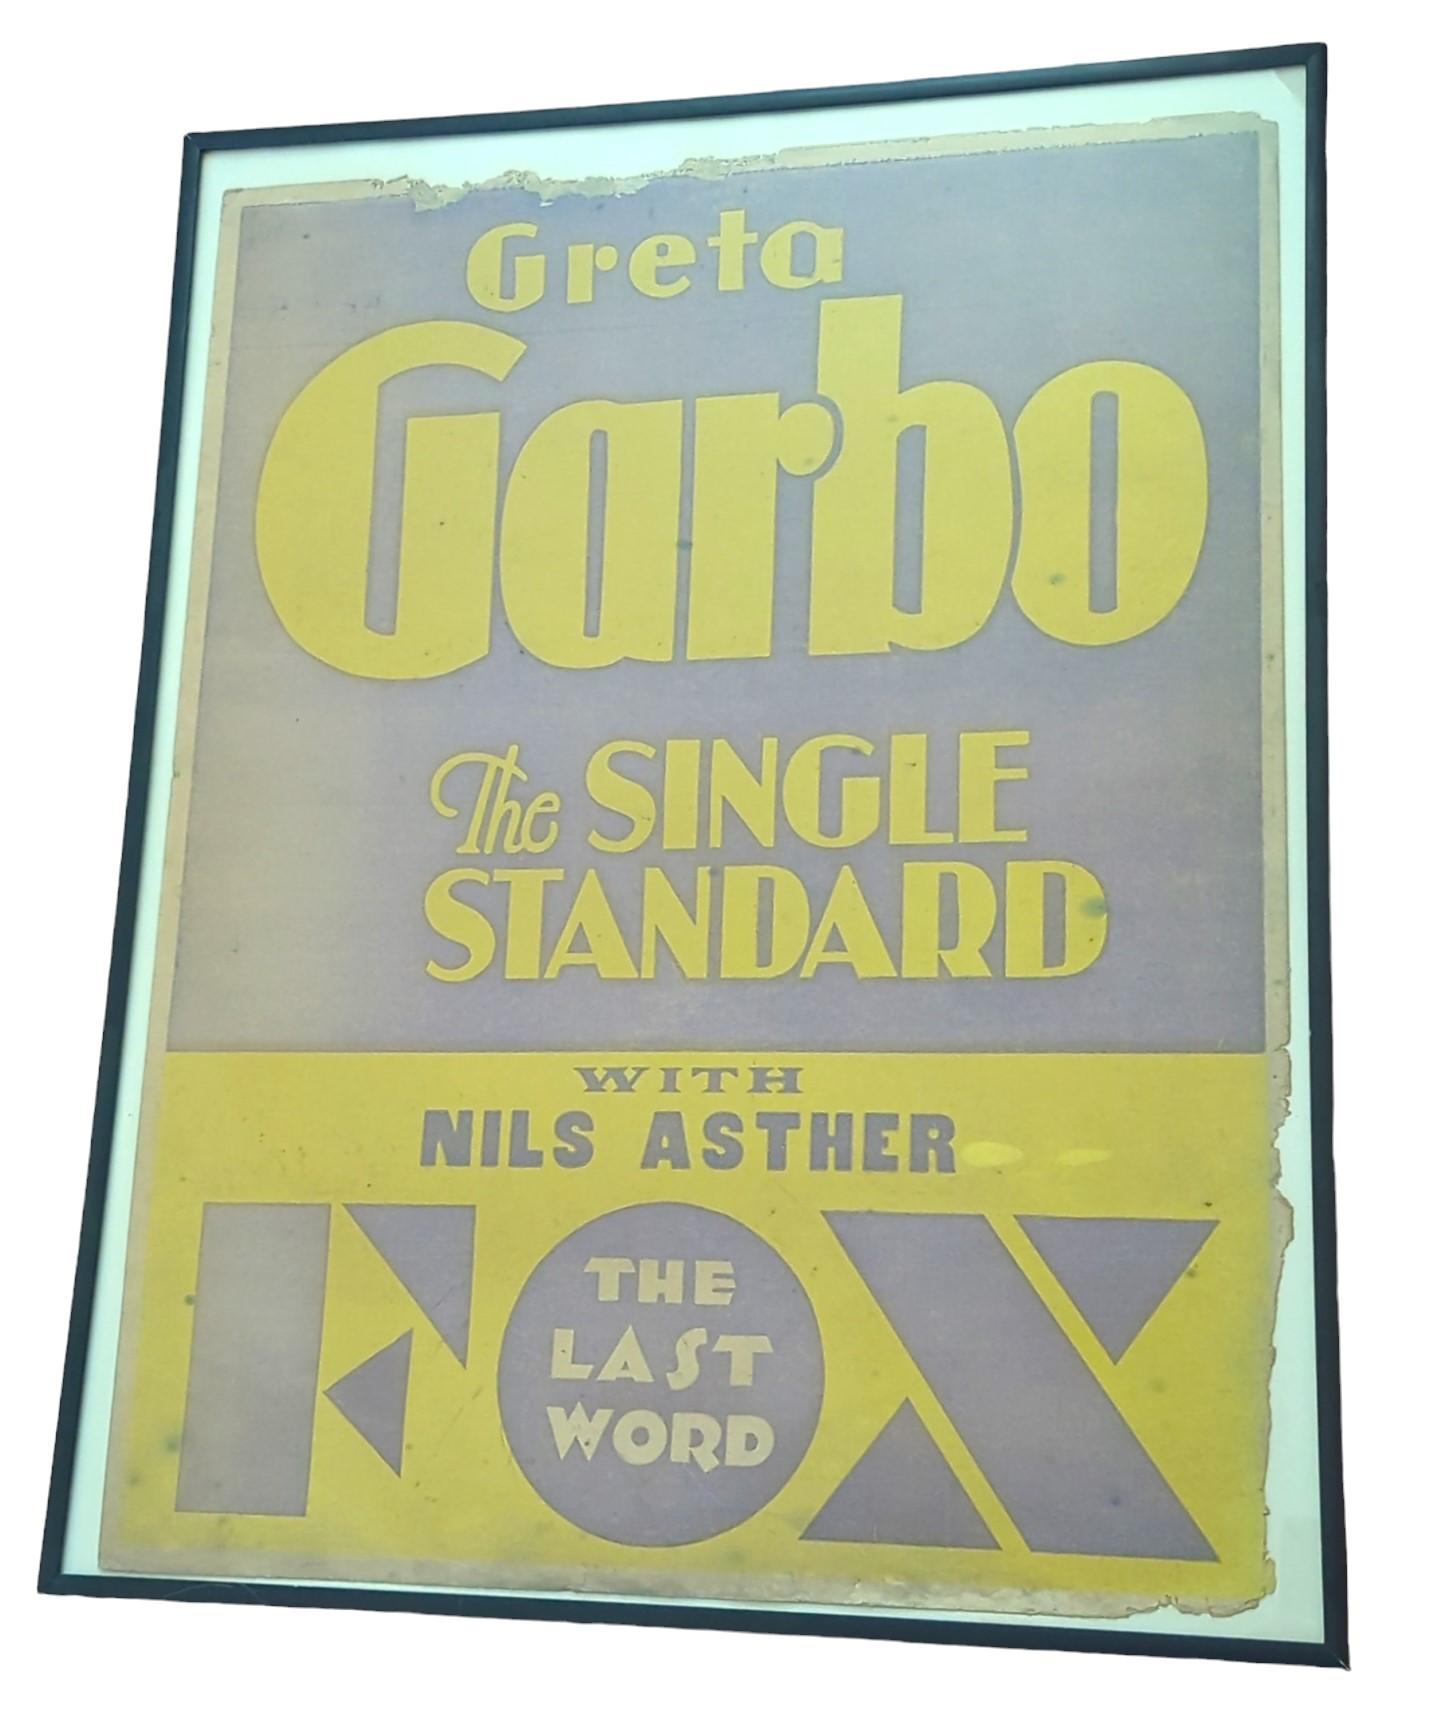 Original 1929 Greta Garbo "THE SINGLE STANDARD" Fox framed movie poster